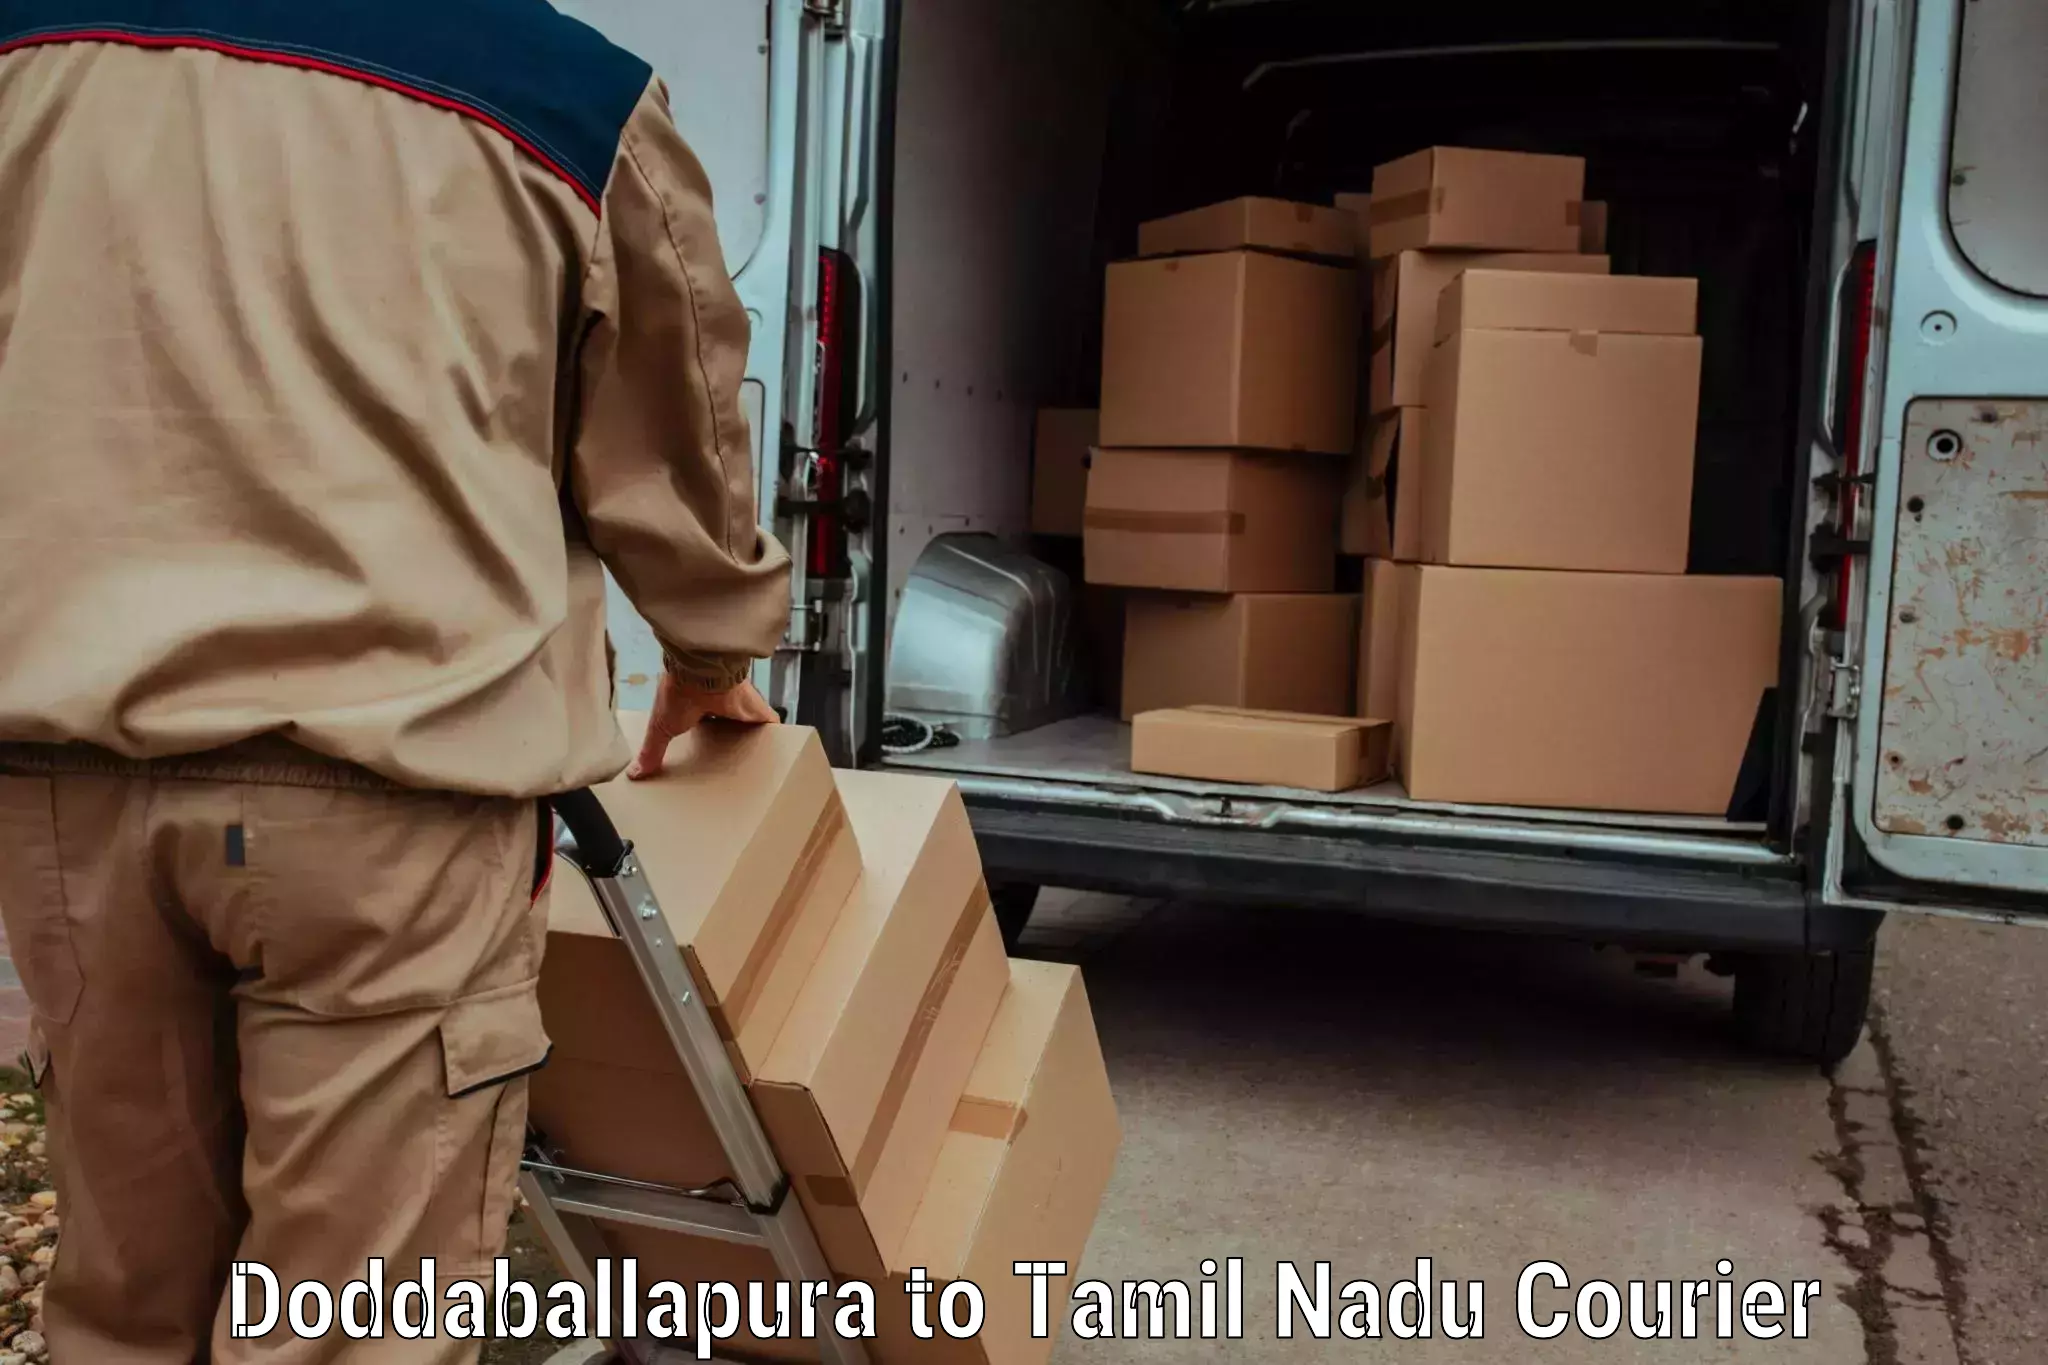 Express mail solutions Doddaballapura to Sholinghur